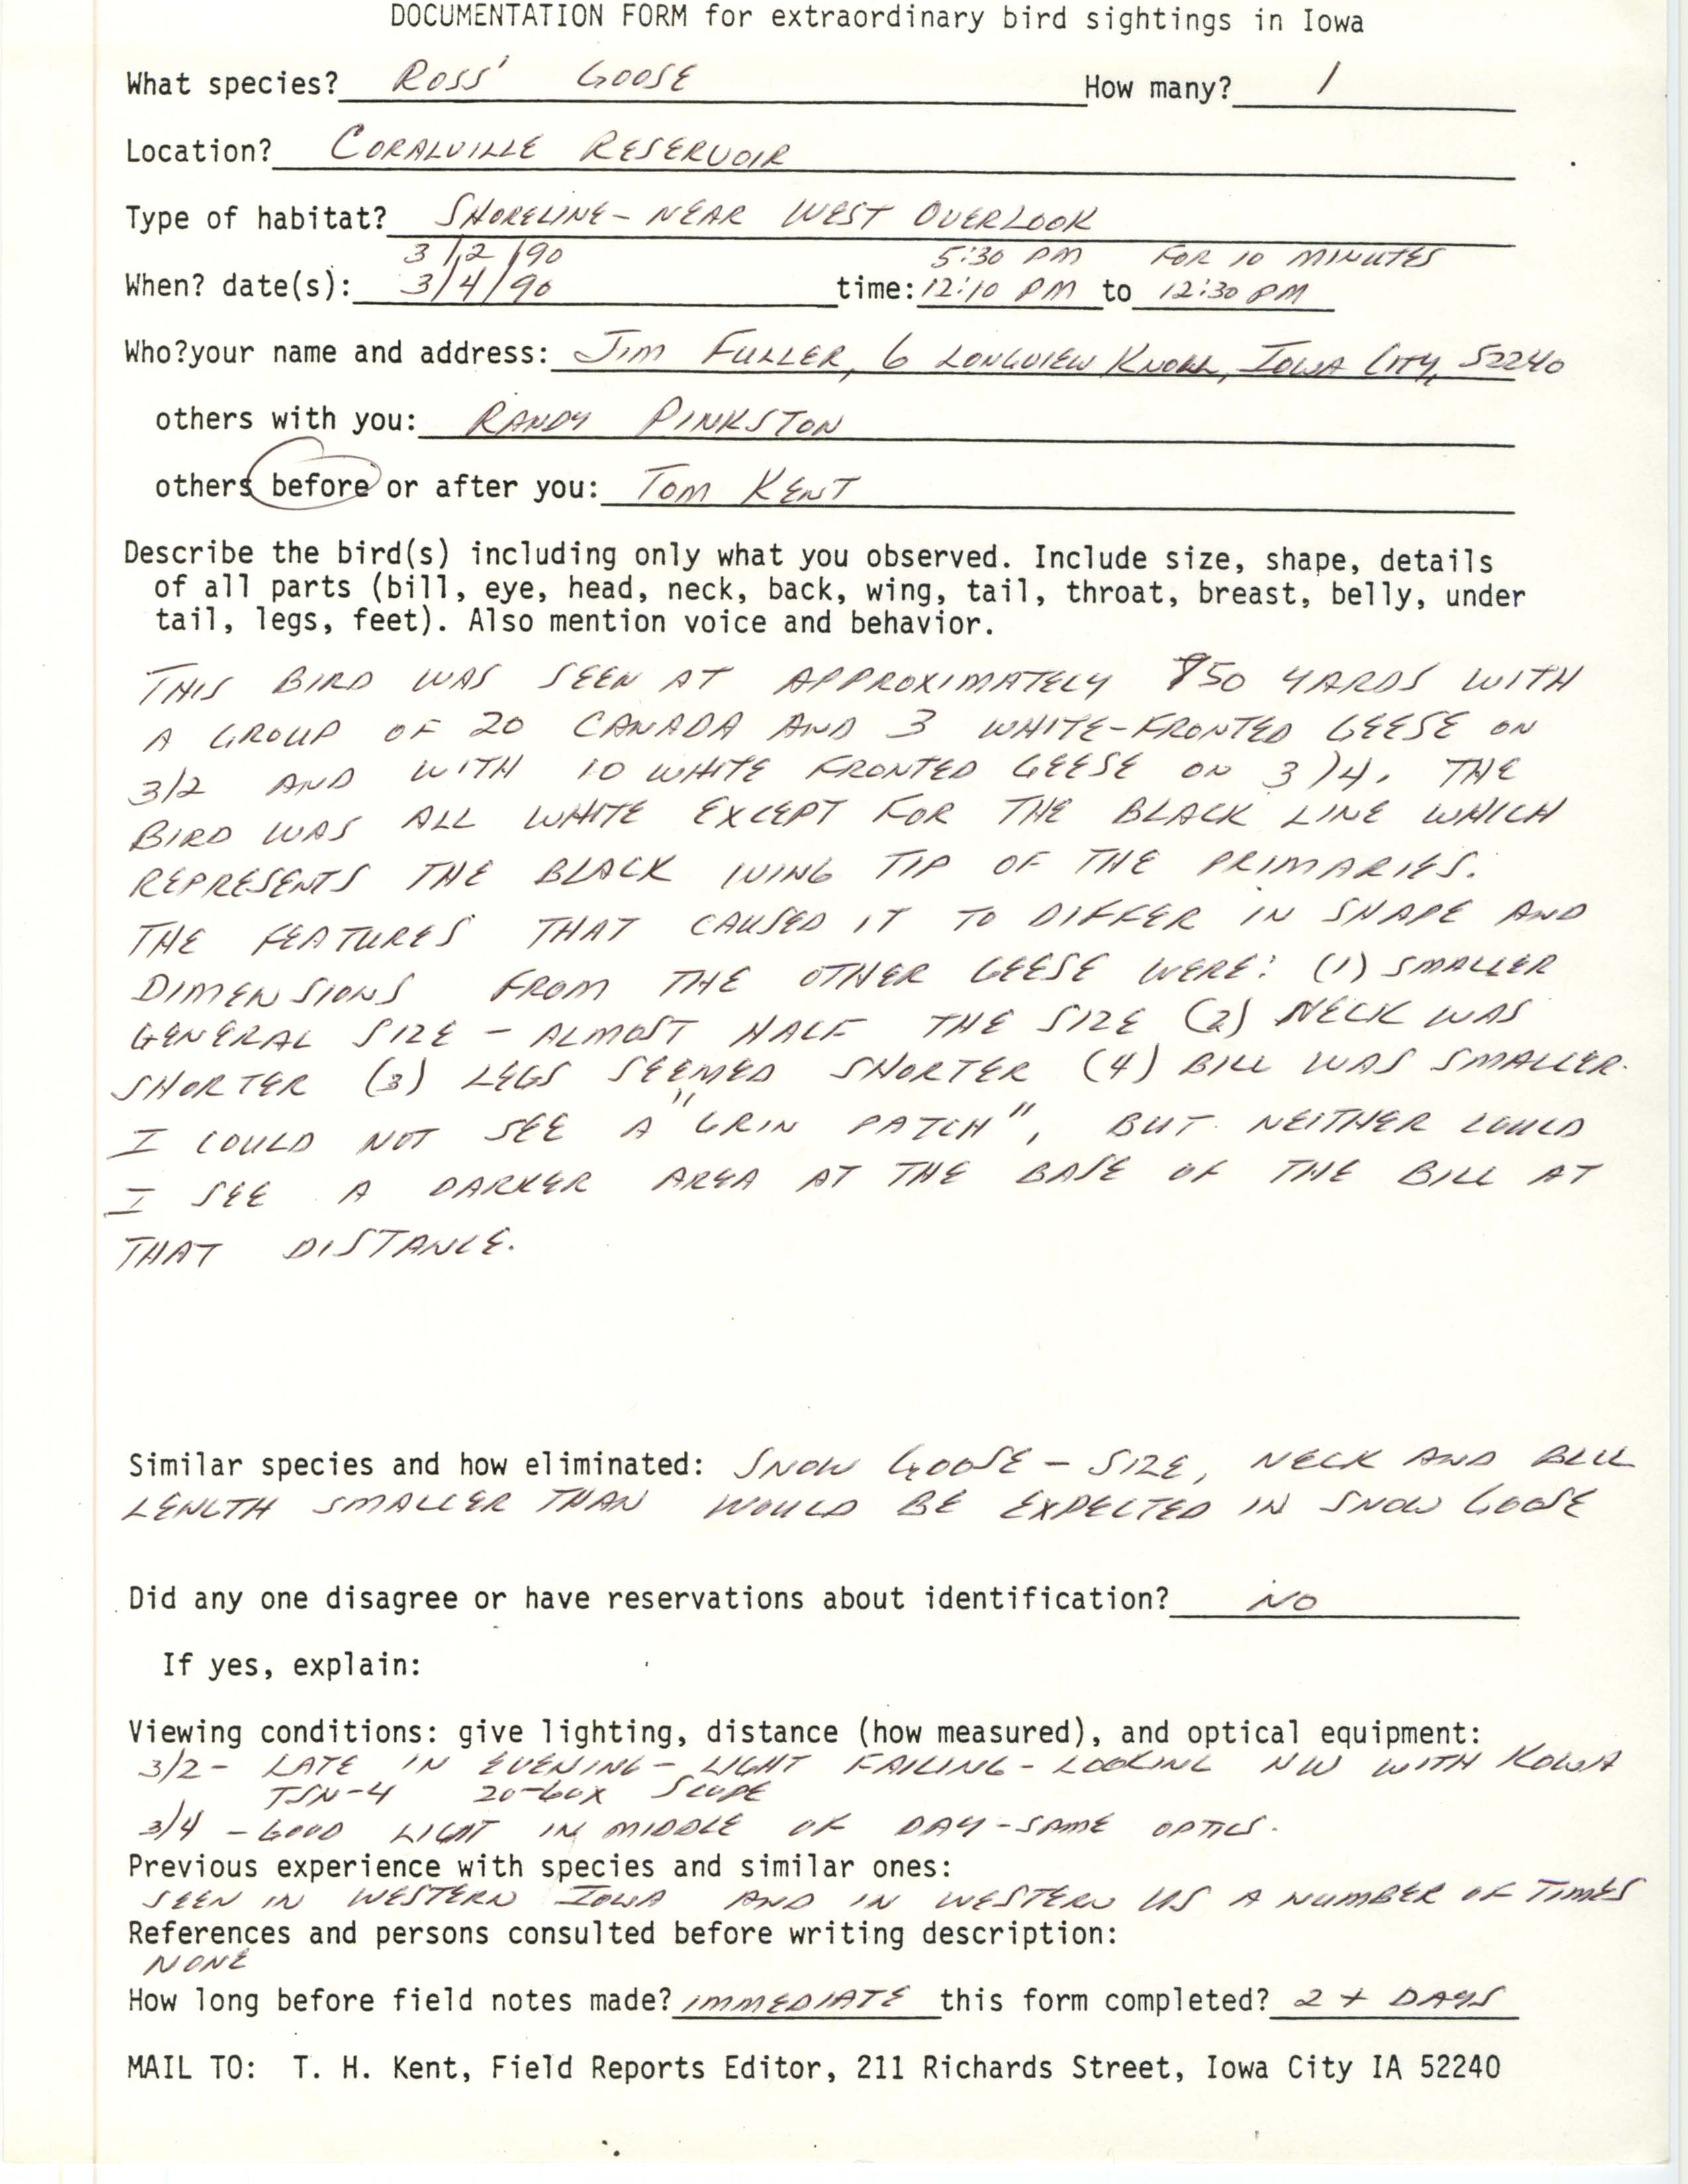 Rare bird documentation form for Ross' Goose at Coralville Reservoir, 1990